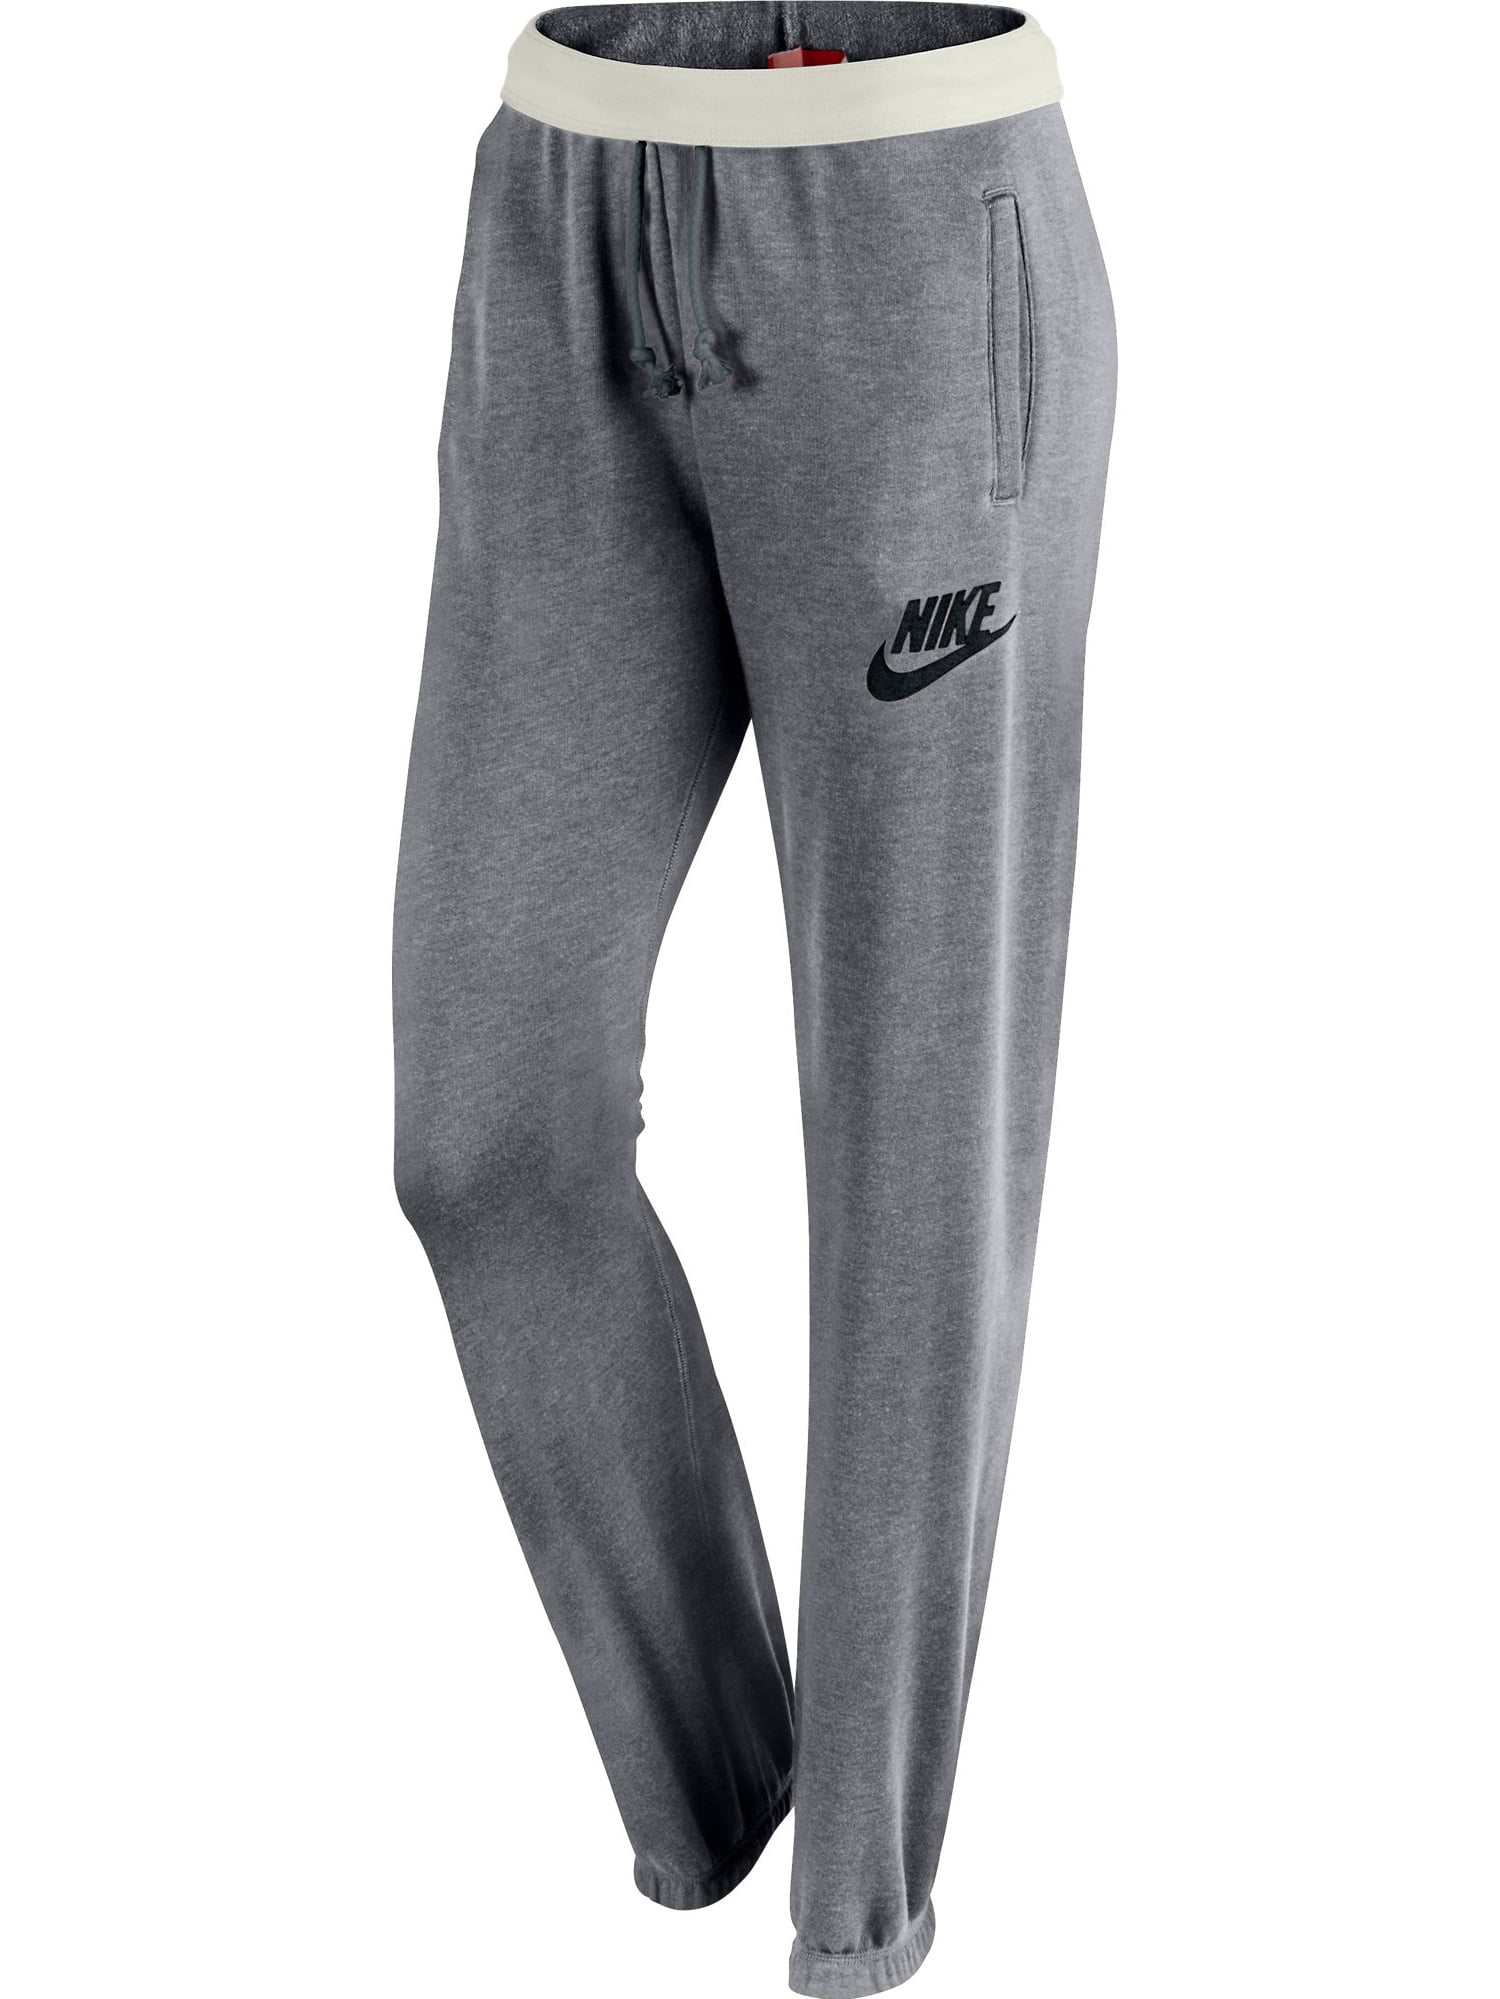 Nike Women's Loose Rally Pant Grey/Black 545755-091 